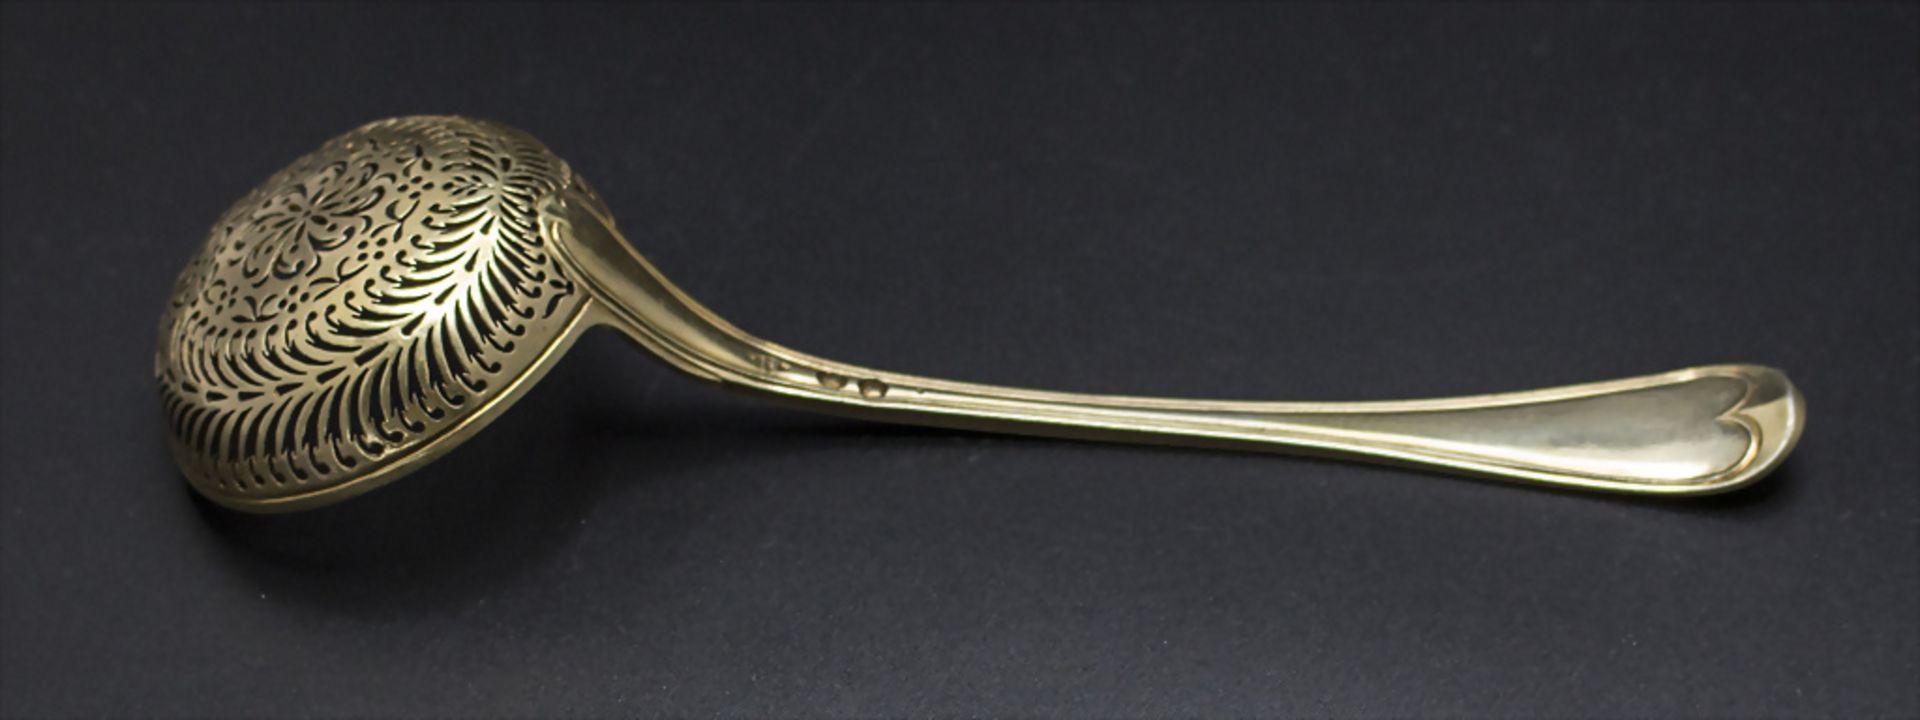 Zuckerstreuer / A silver sugar sifter spoon, Jacques-Jérémie Hubert, Paris, 1809-1819 - Image 3 of 5